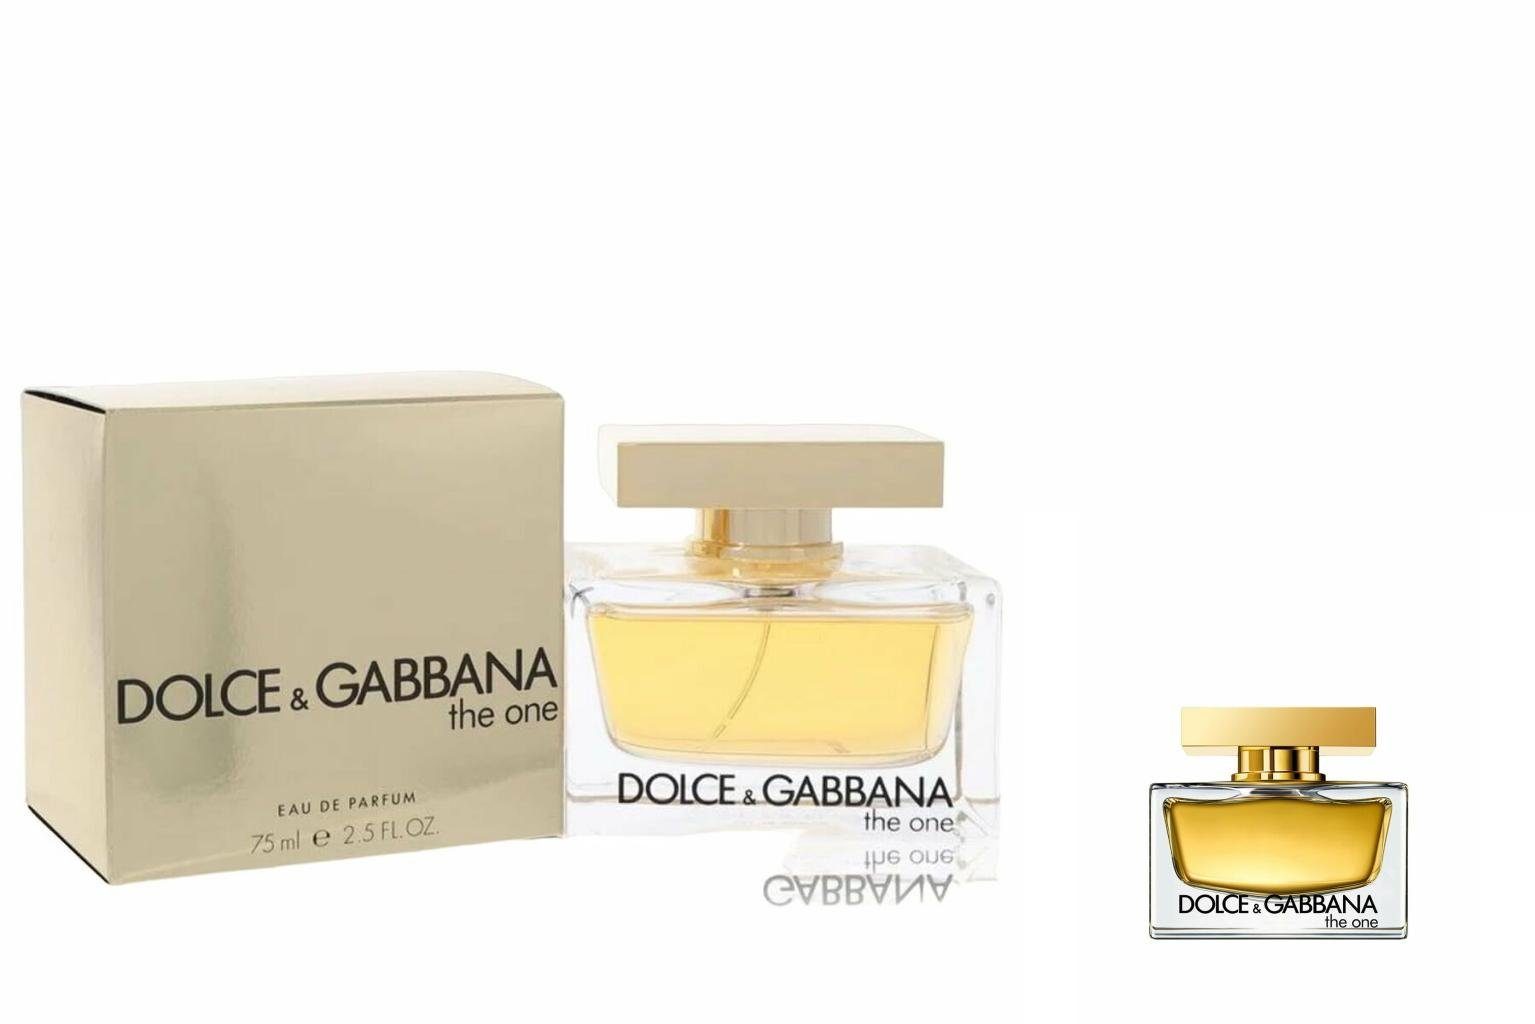 DOLCE & GABBANA Eau de Parfum Dolce & Gabbana The One Eau de Parfum edp  75ml.